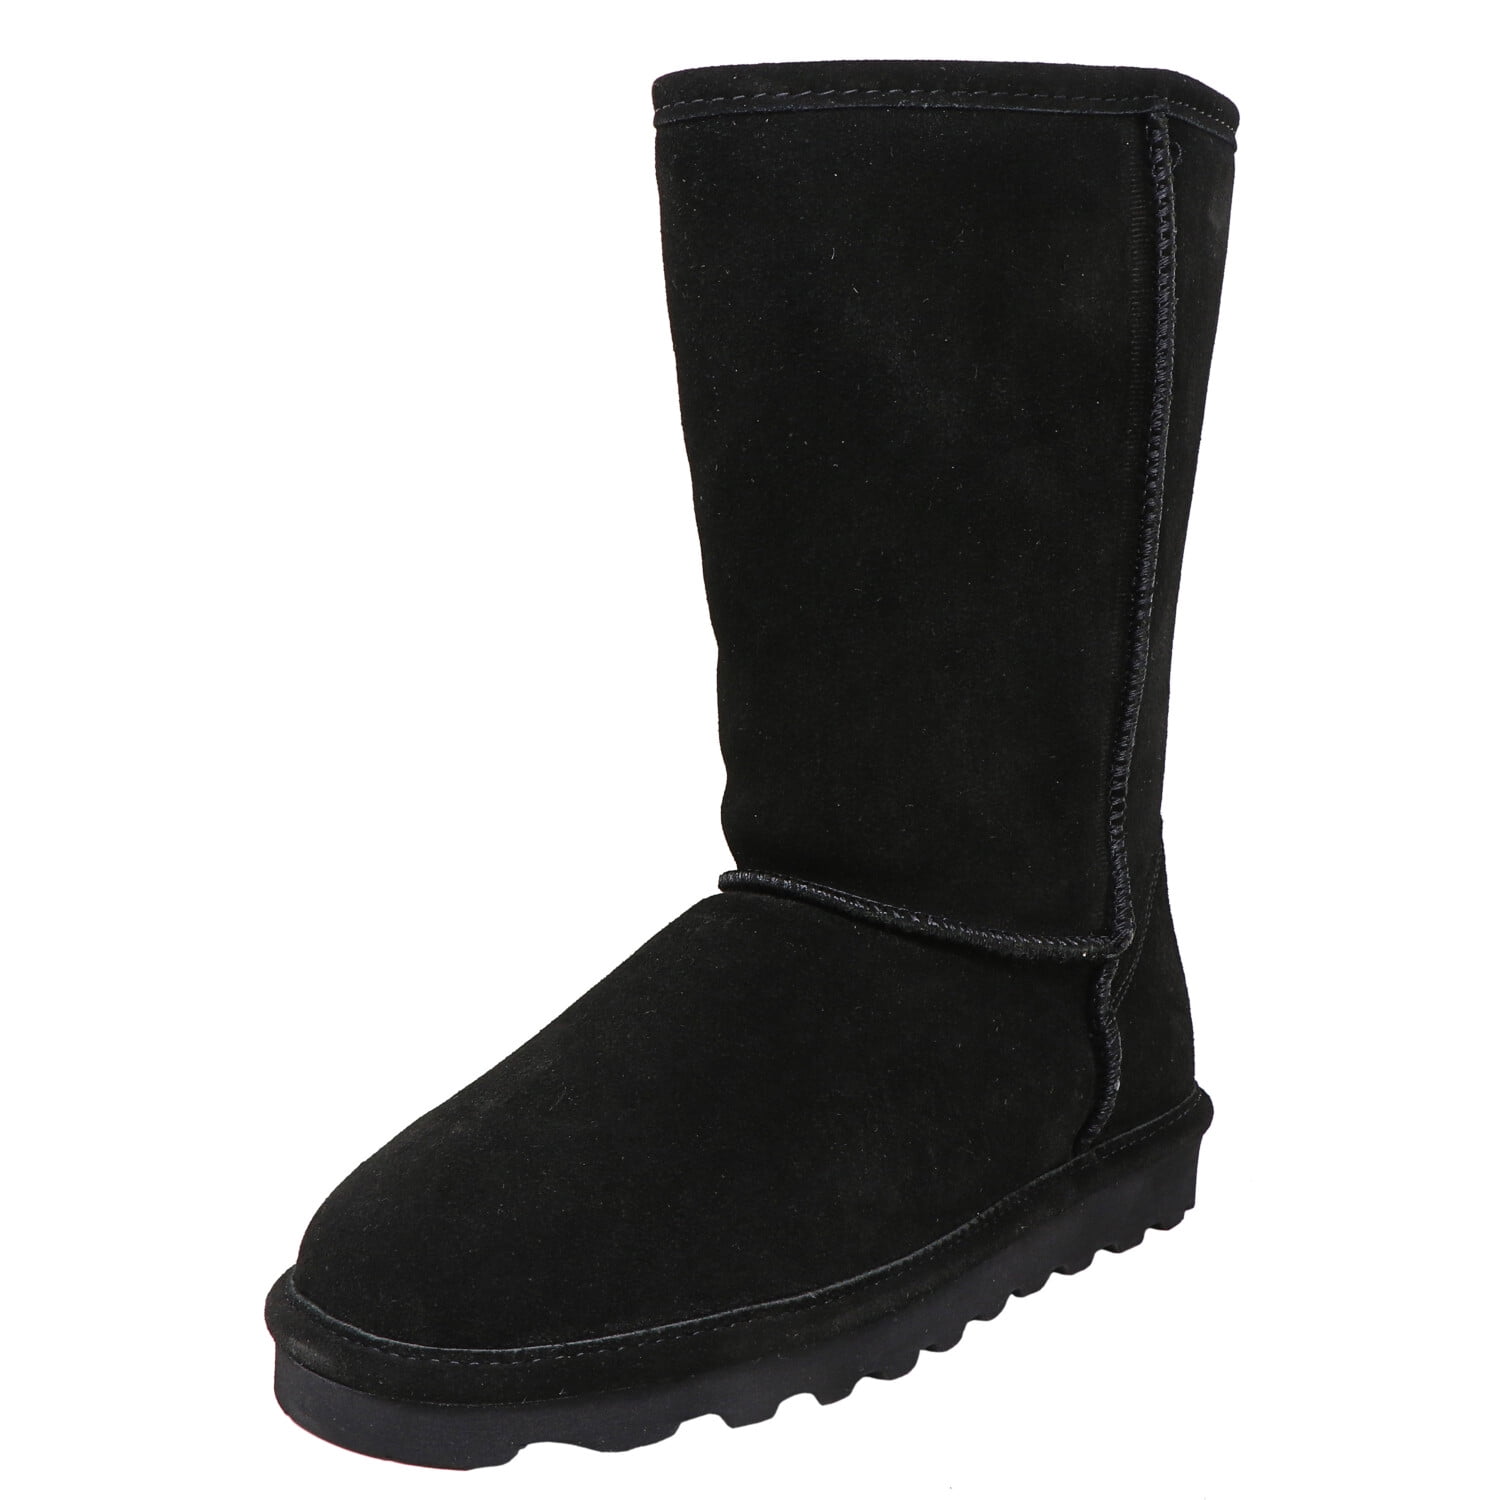 Bearpaw Elle Tall Black Ii Mid-Calf Leather Snow Boot - 5M | Walmart Canada